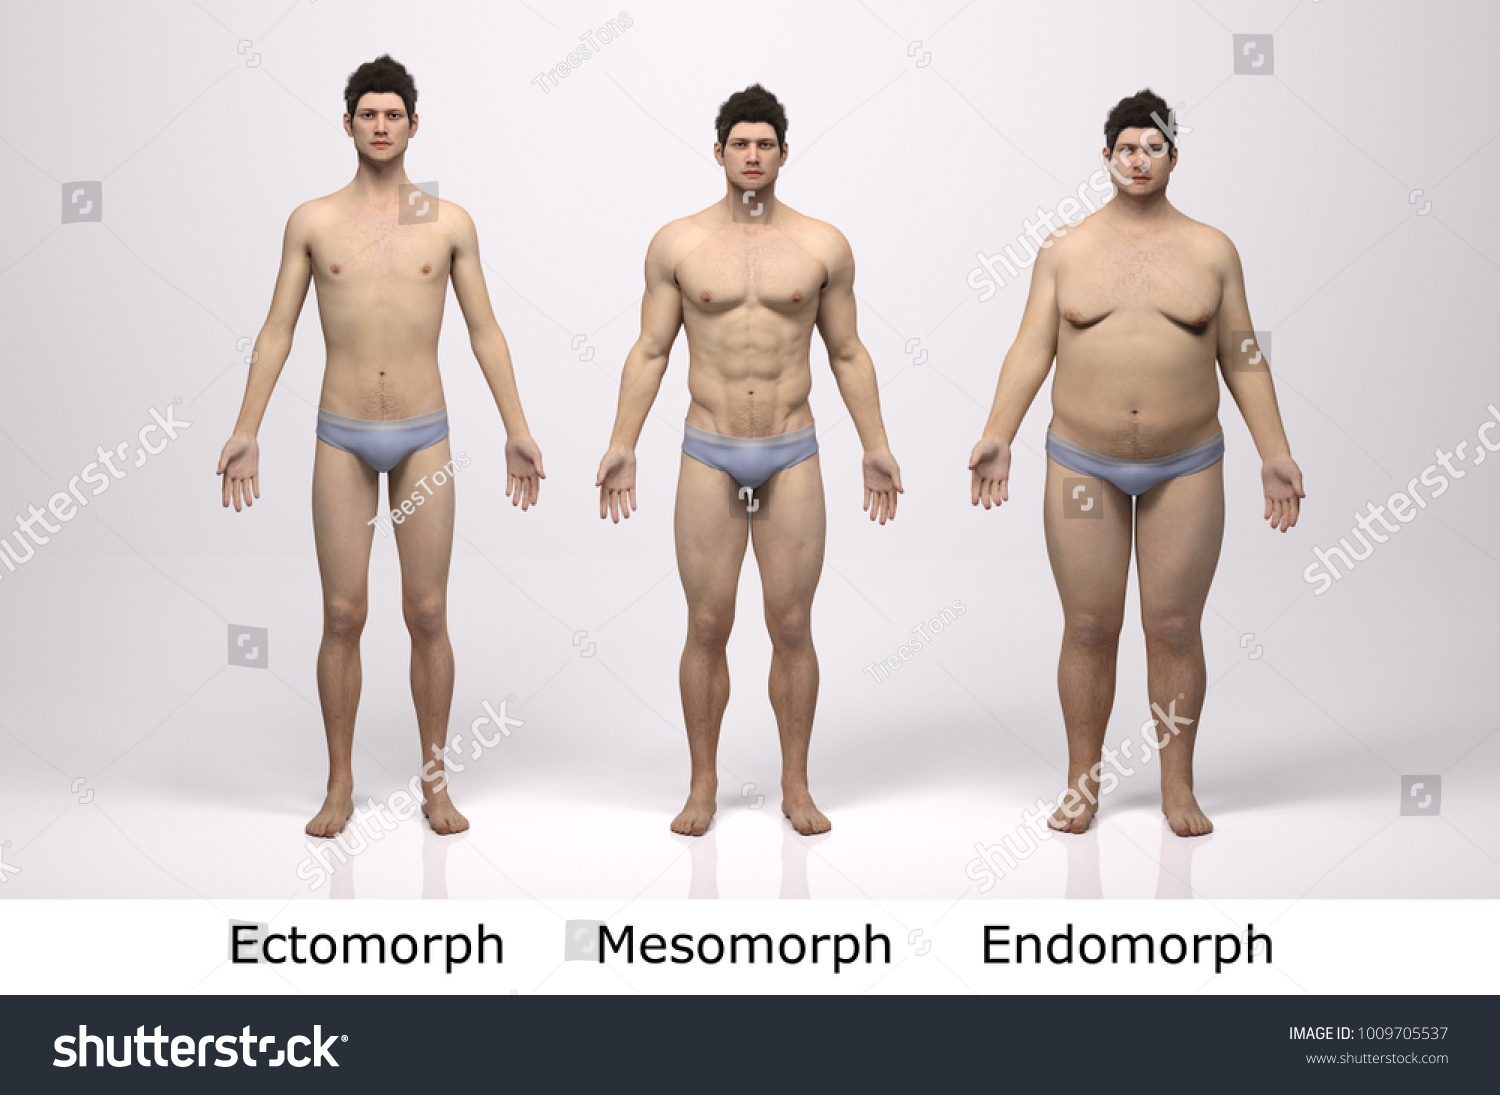 Mesomorph body Type